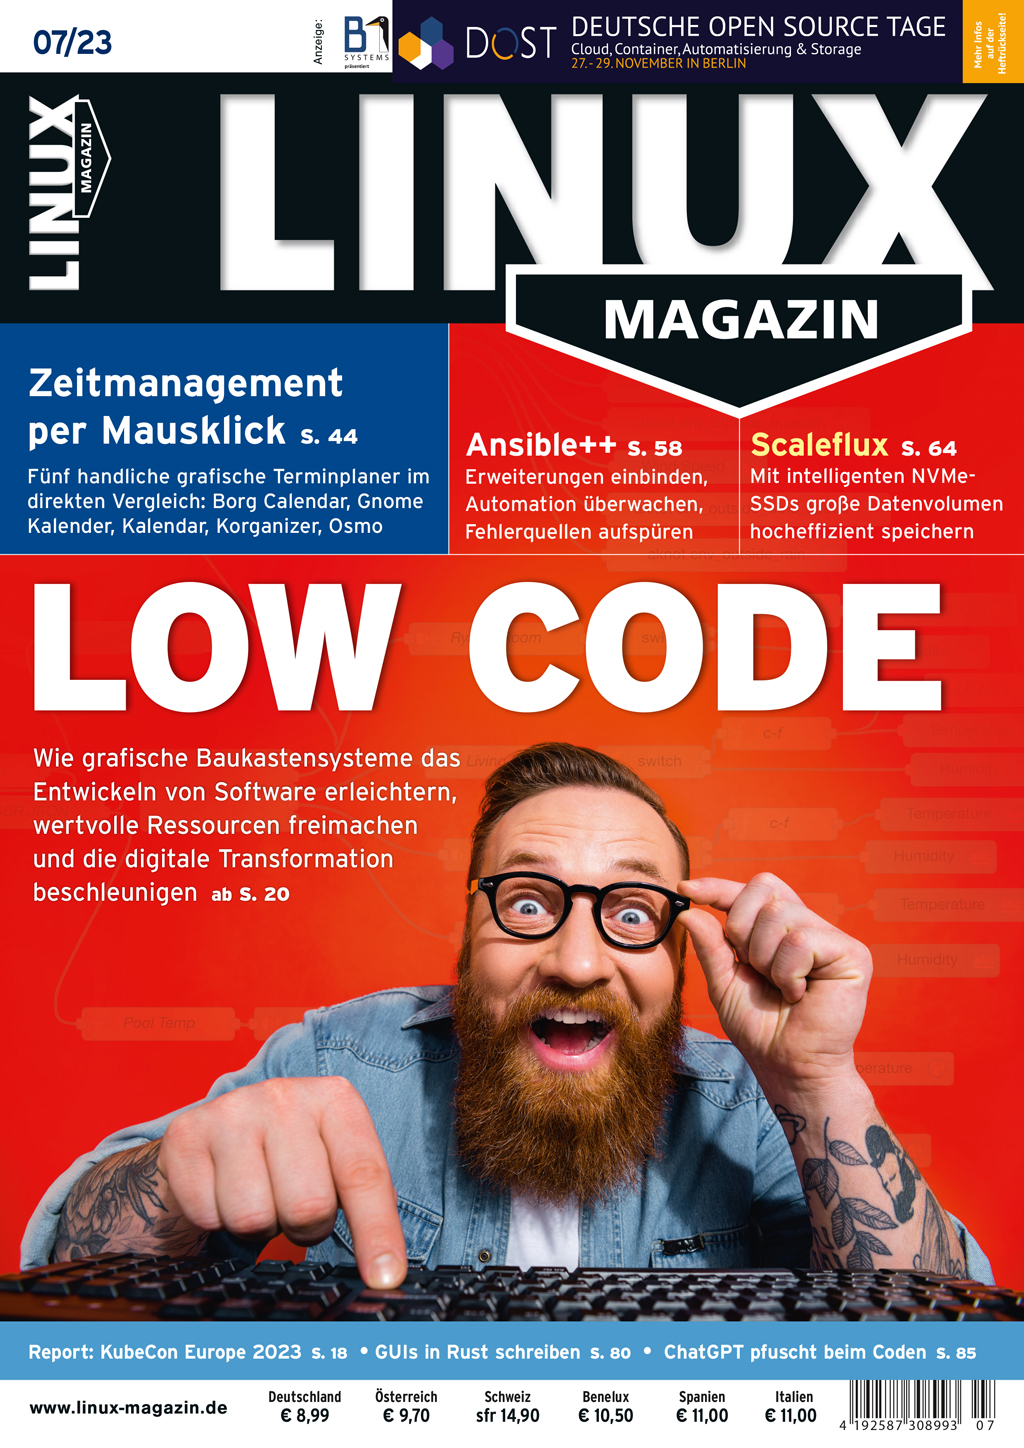 Linux Magazin Print (mit DVD)